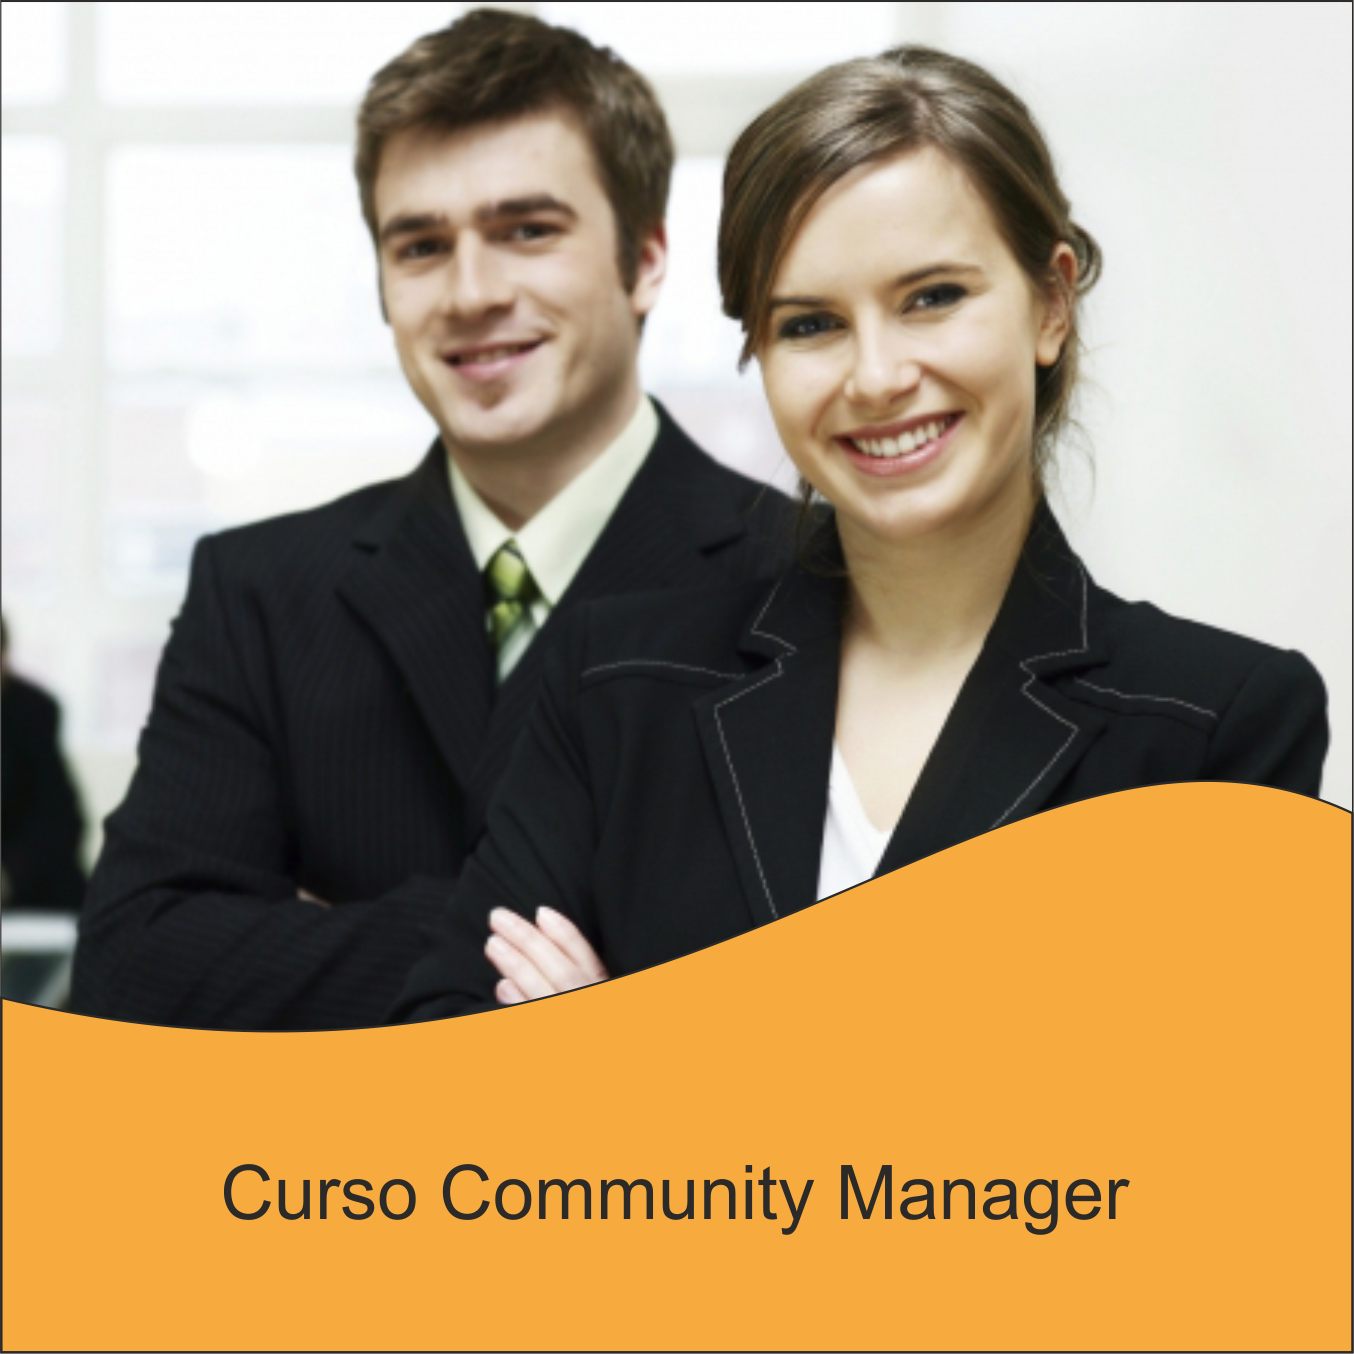 CURSO COMMUNITY MANAGER